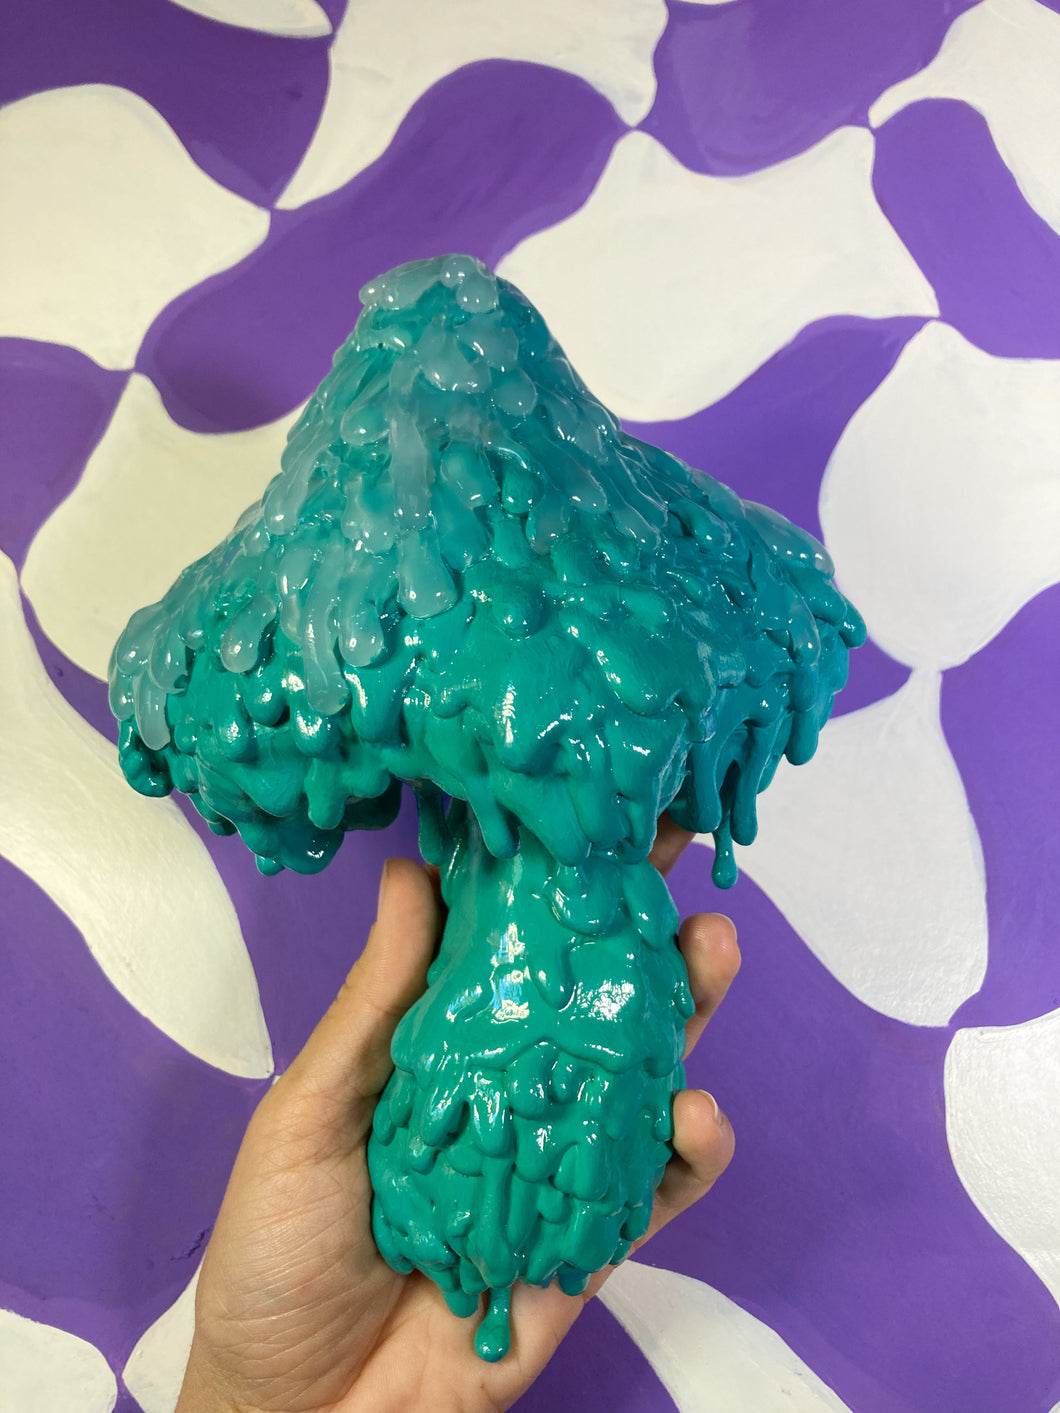 Melting mushroom sculpture (teal)